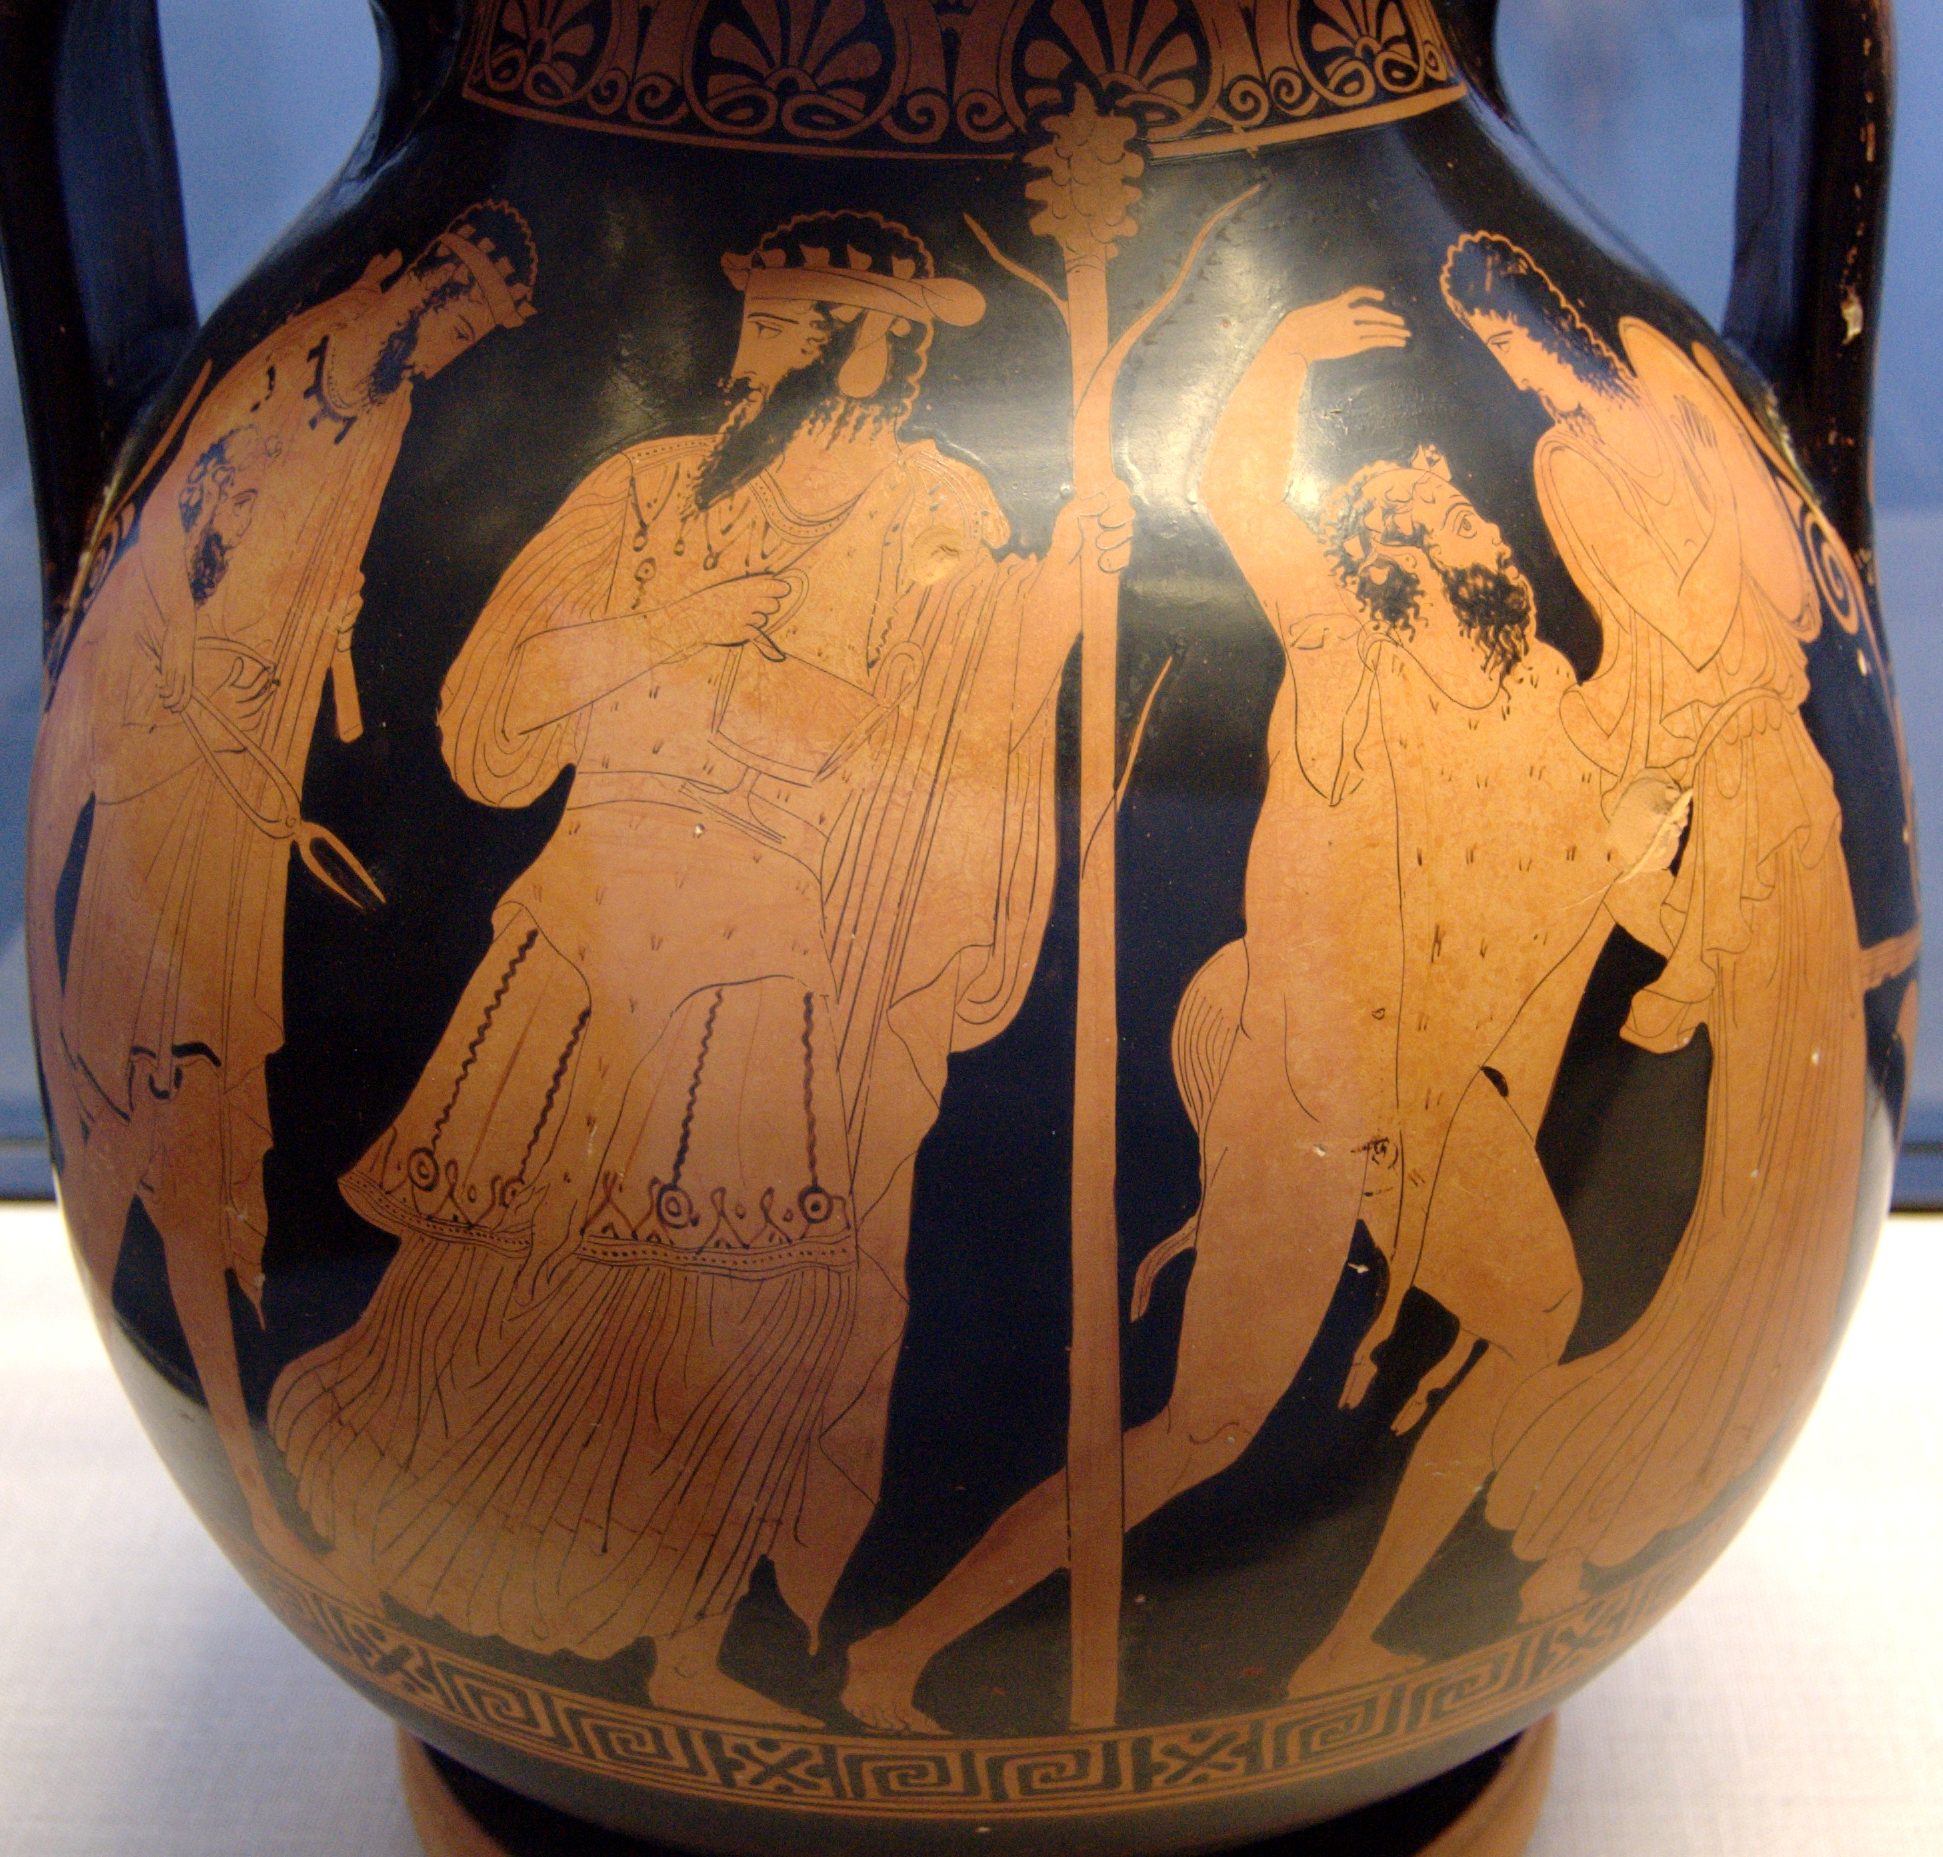 Dionysus, holding his thyrsus, walks ahead of Hephaestus. Hephaestus is slumped and leaning on a man. A silenus and maenad woman walk ahead play instrument.